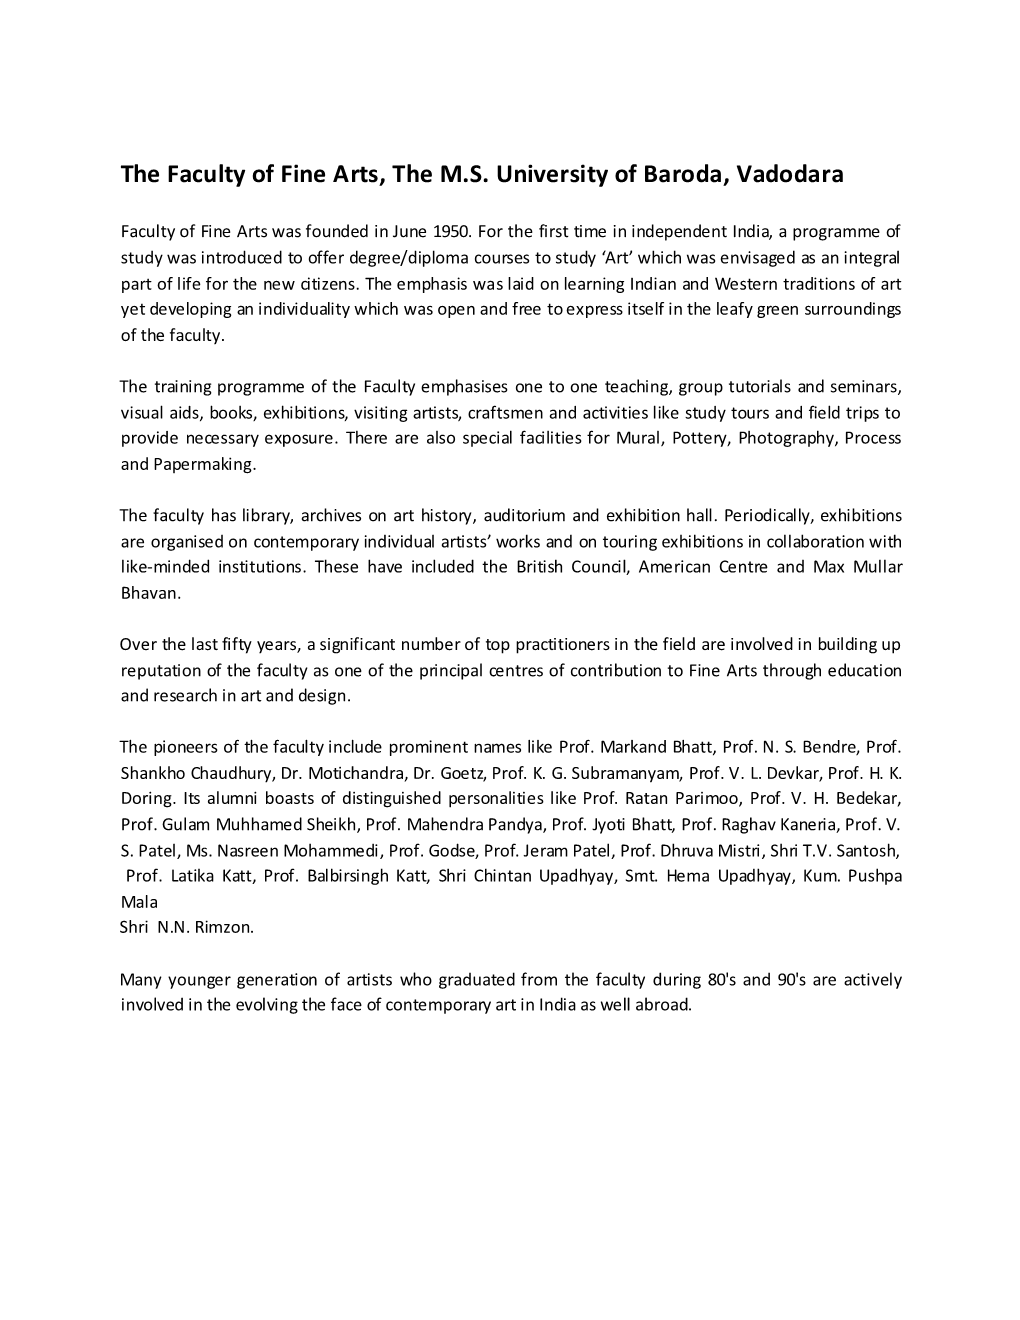 The Faculty of Fine Arts, the M.S. University of Baroda, Vadodara